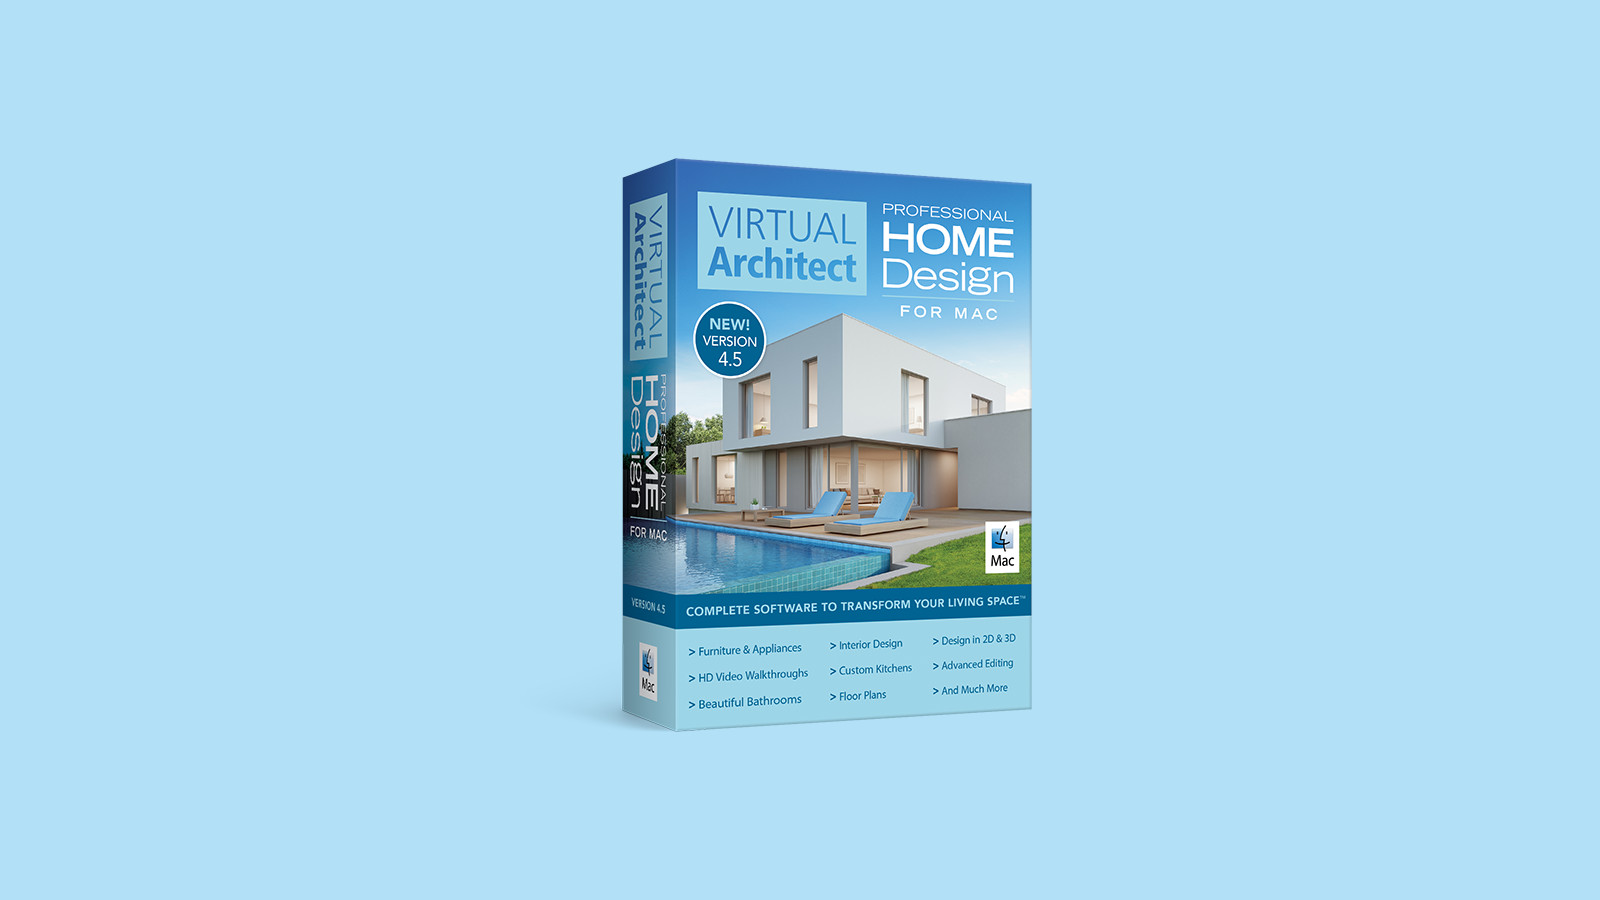 Virtual Architect Professional Home Design for Mac CD Key [USD 64.8]